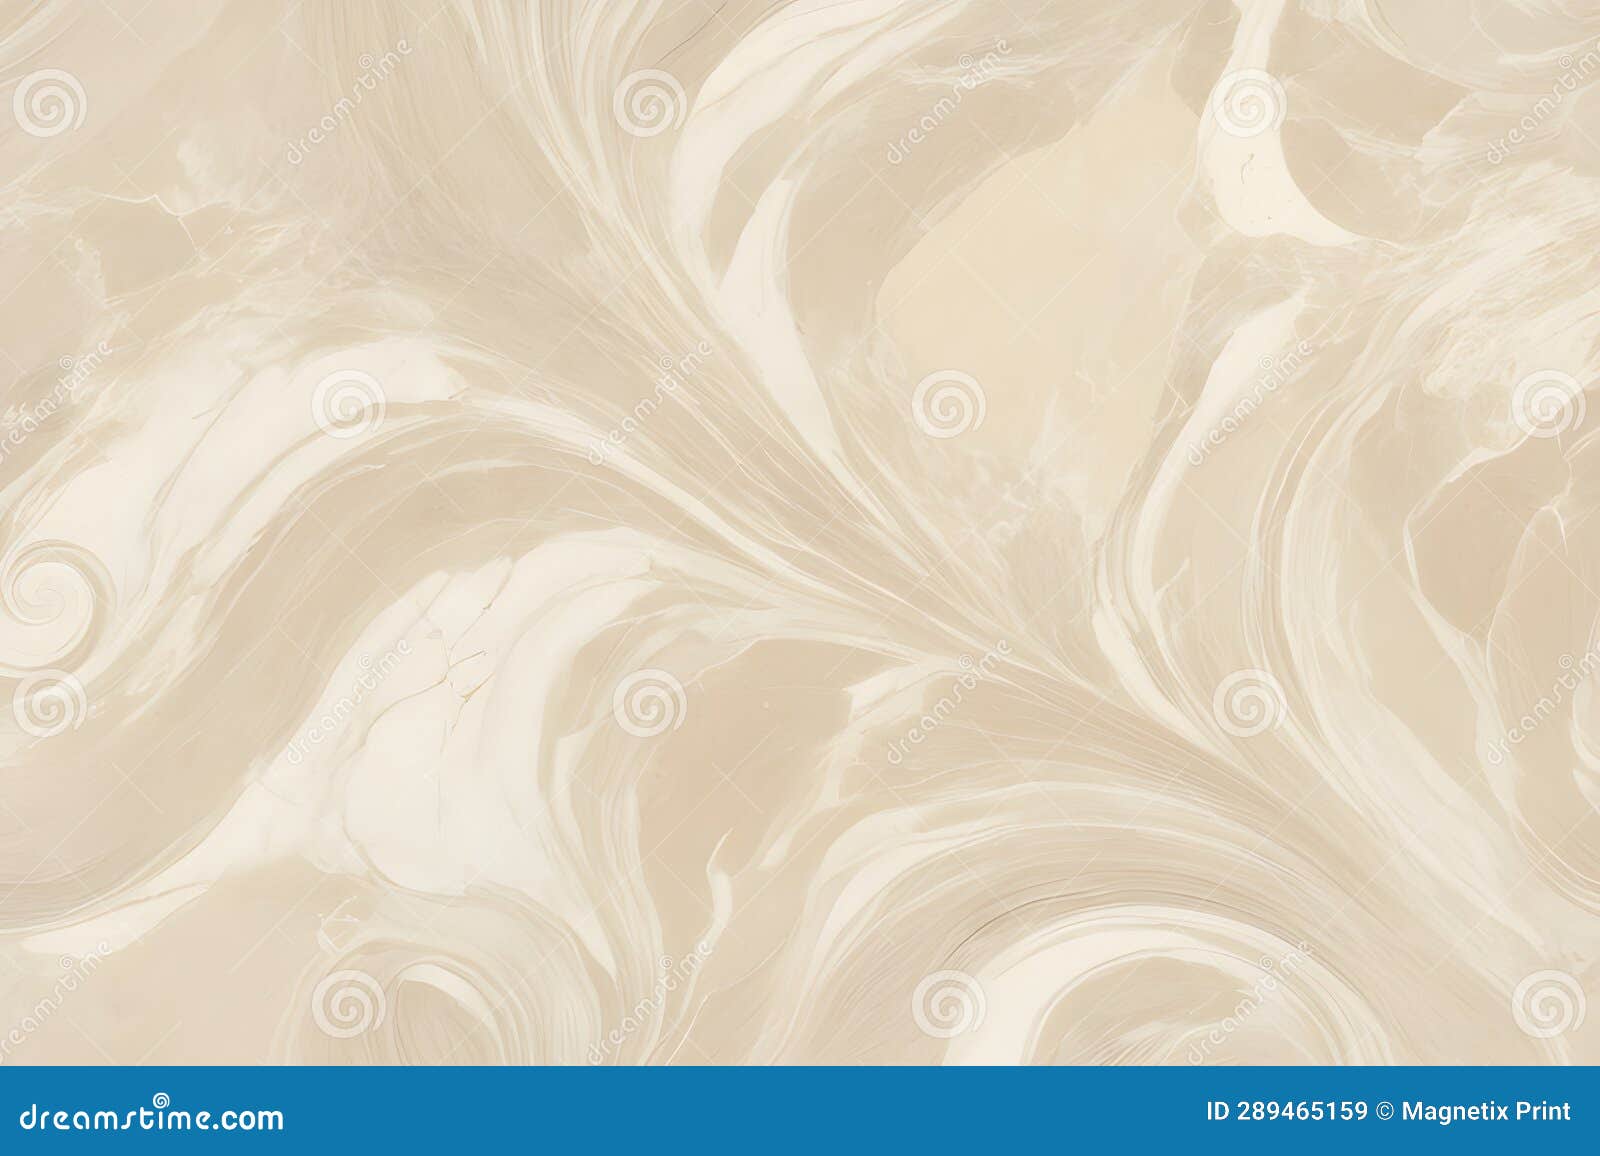 crema marfil marble with creamy beige swirls